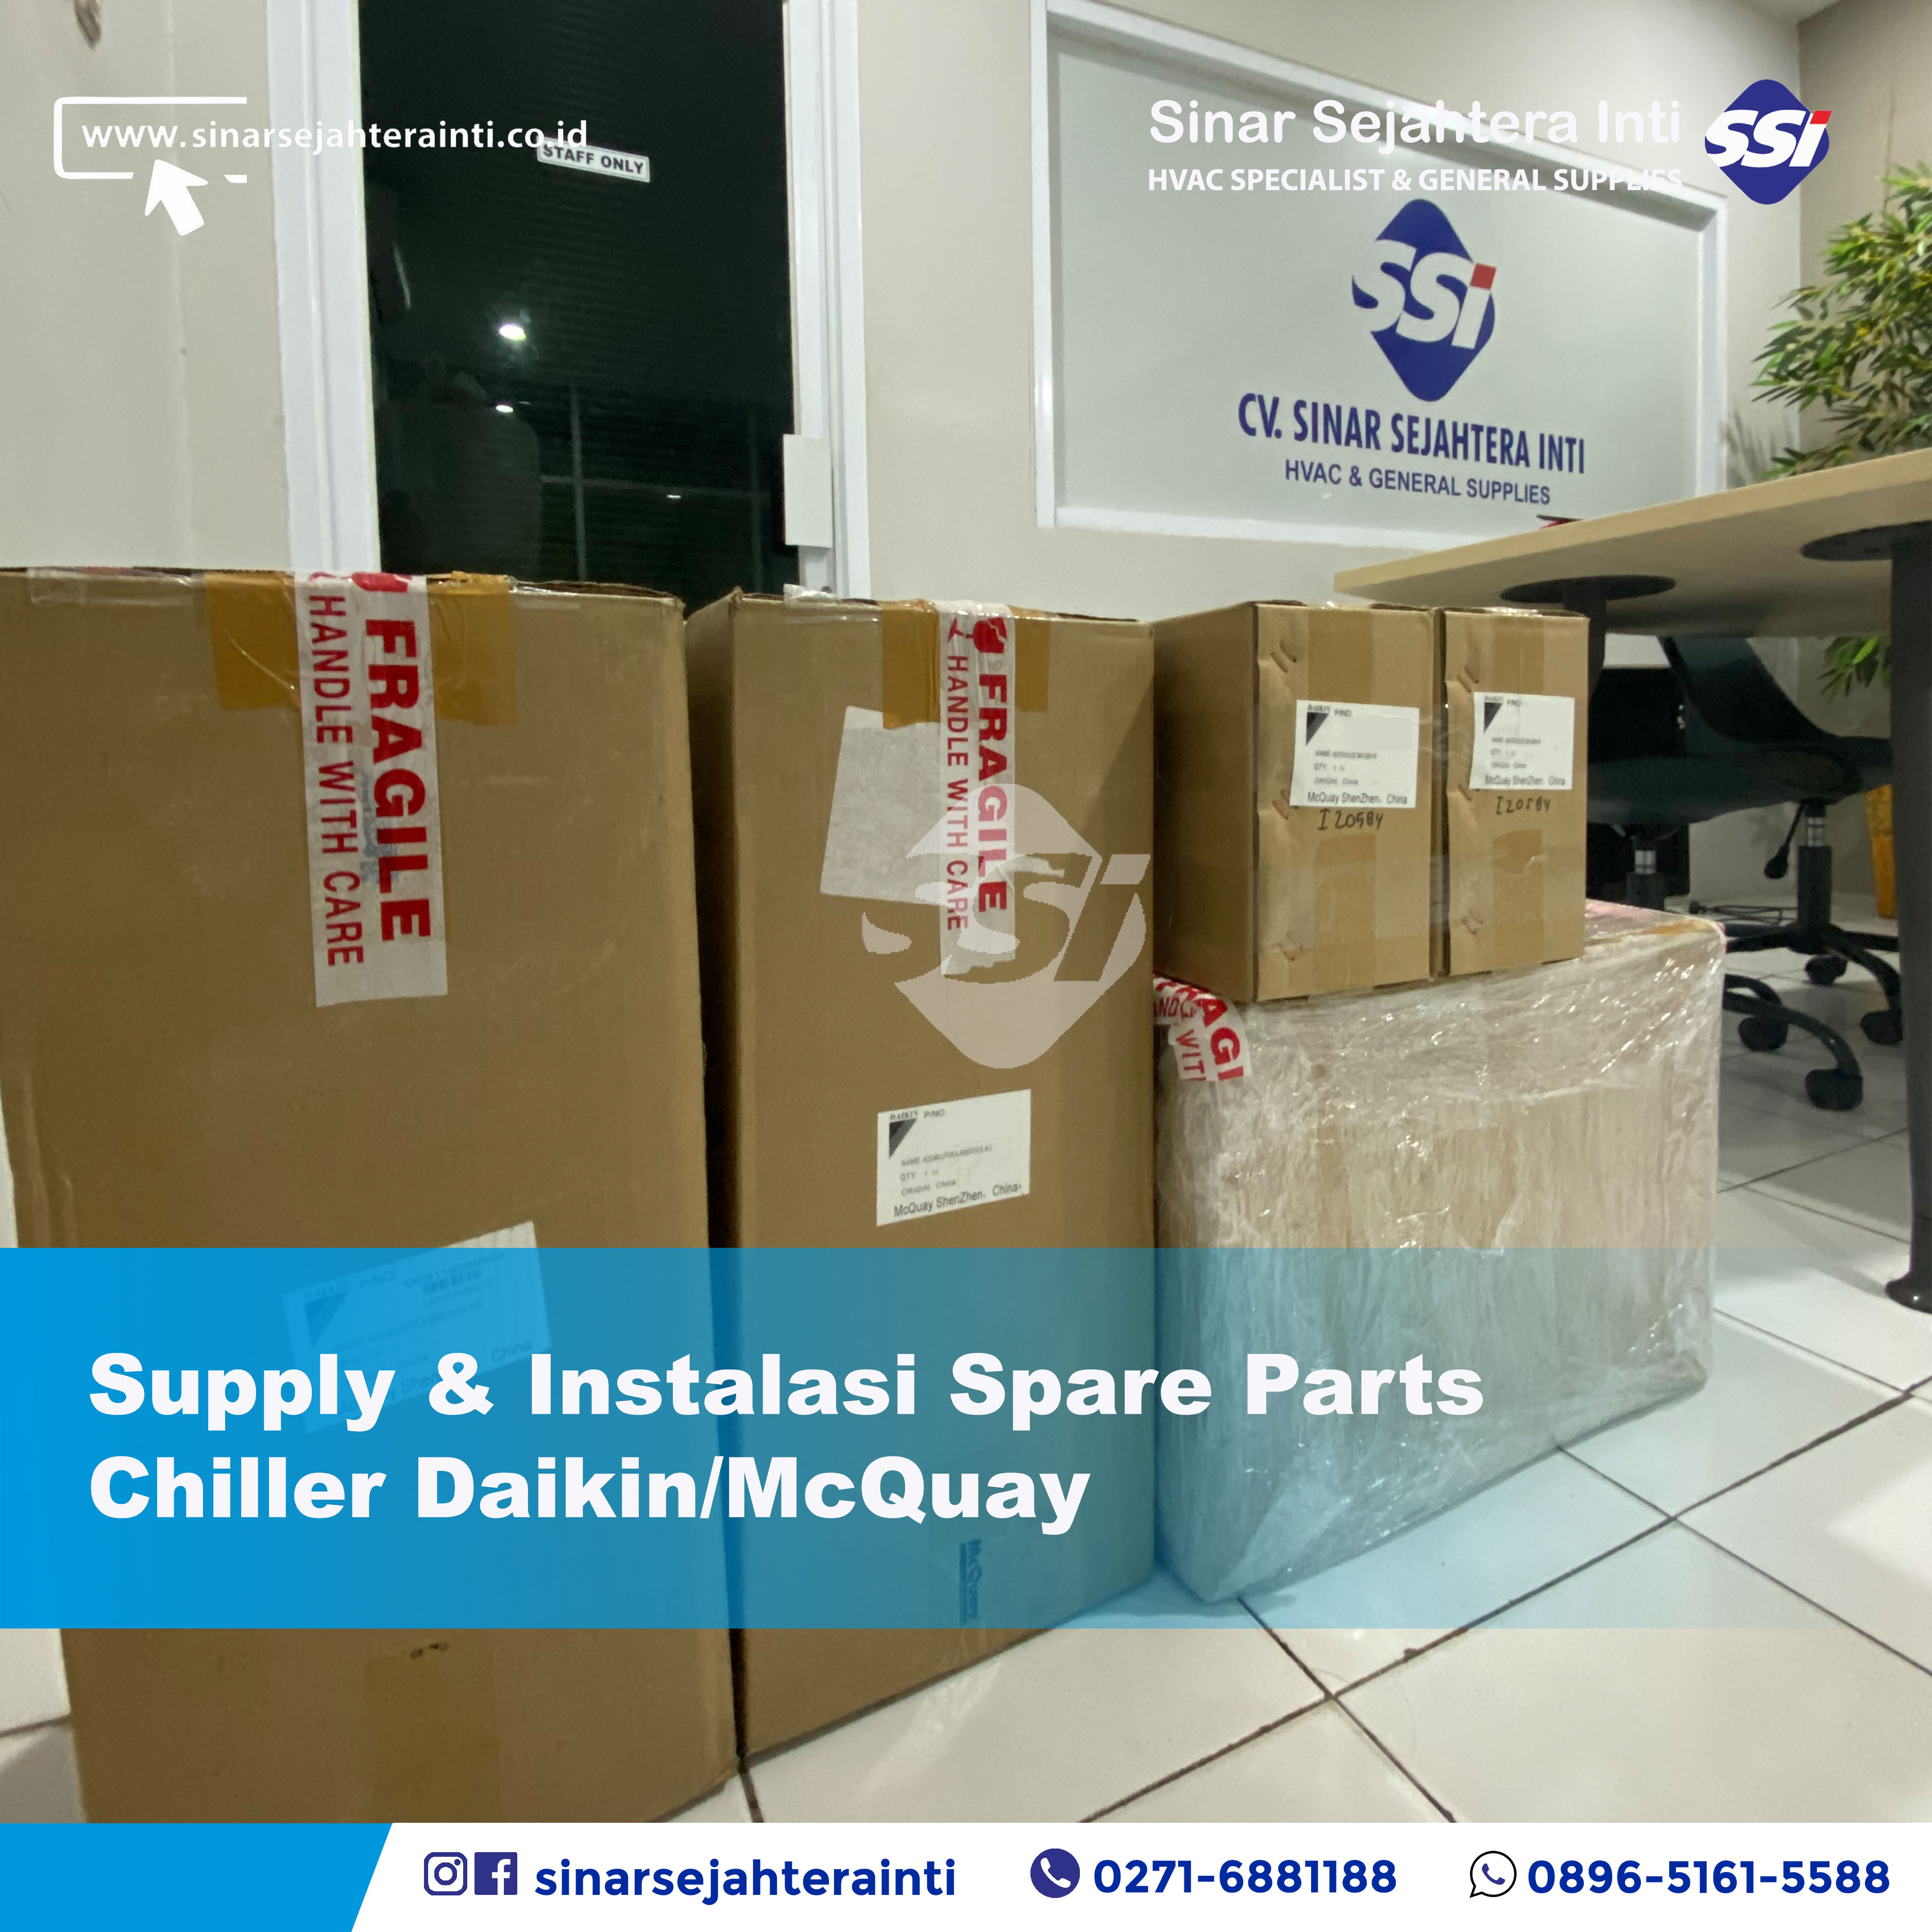 Supply & Instalasi Spare Parts Chiller Daikin / McQuay McSmart